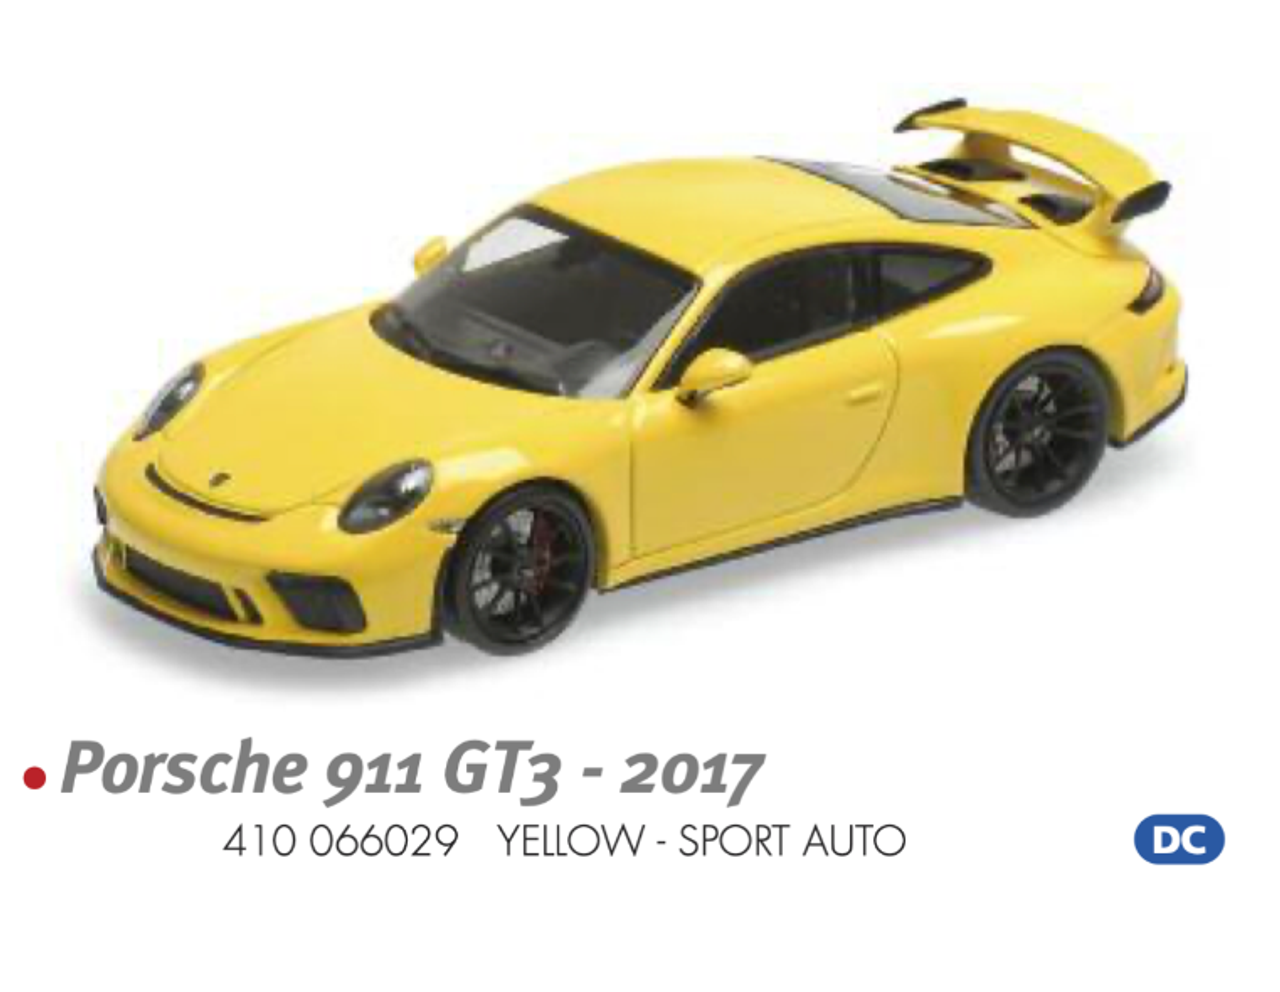 1/43 Minichamps PORSCHE 911 GT3 - 2017 - YELLOW - SPORT AUTO Diecast Car Model